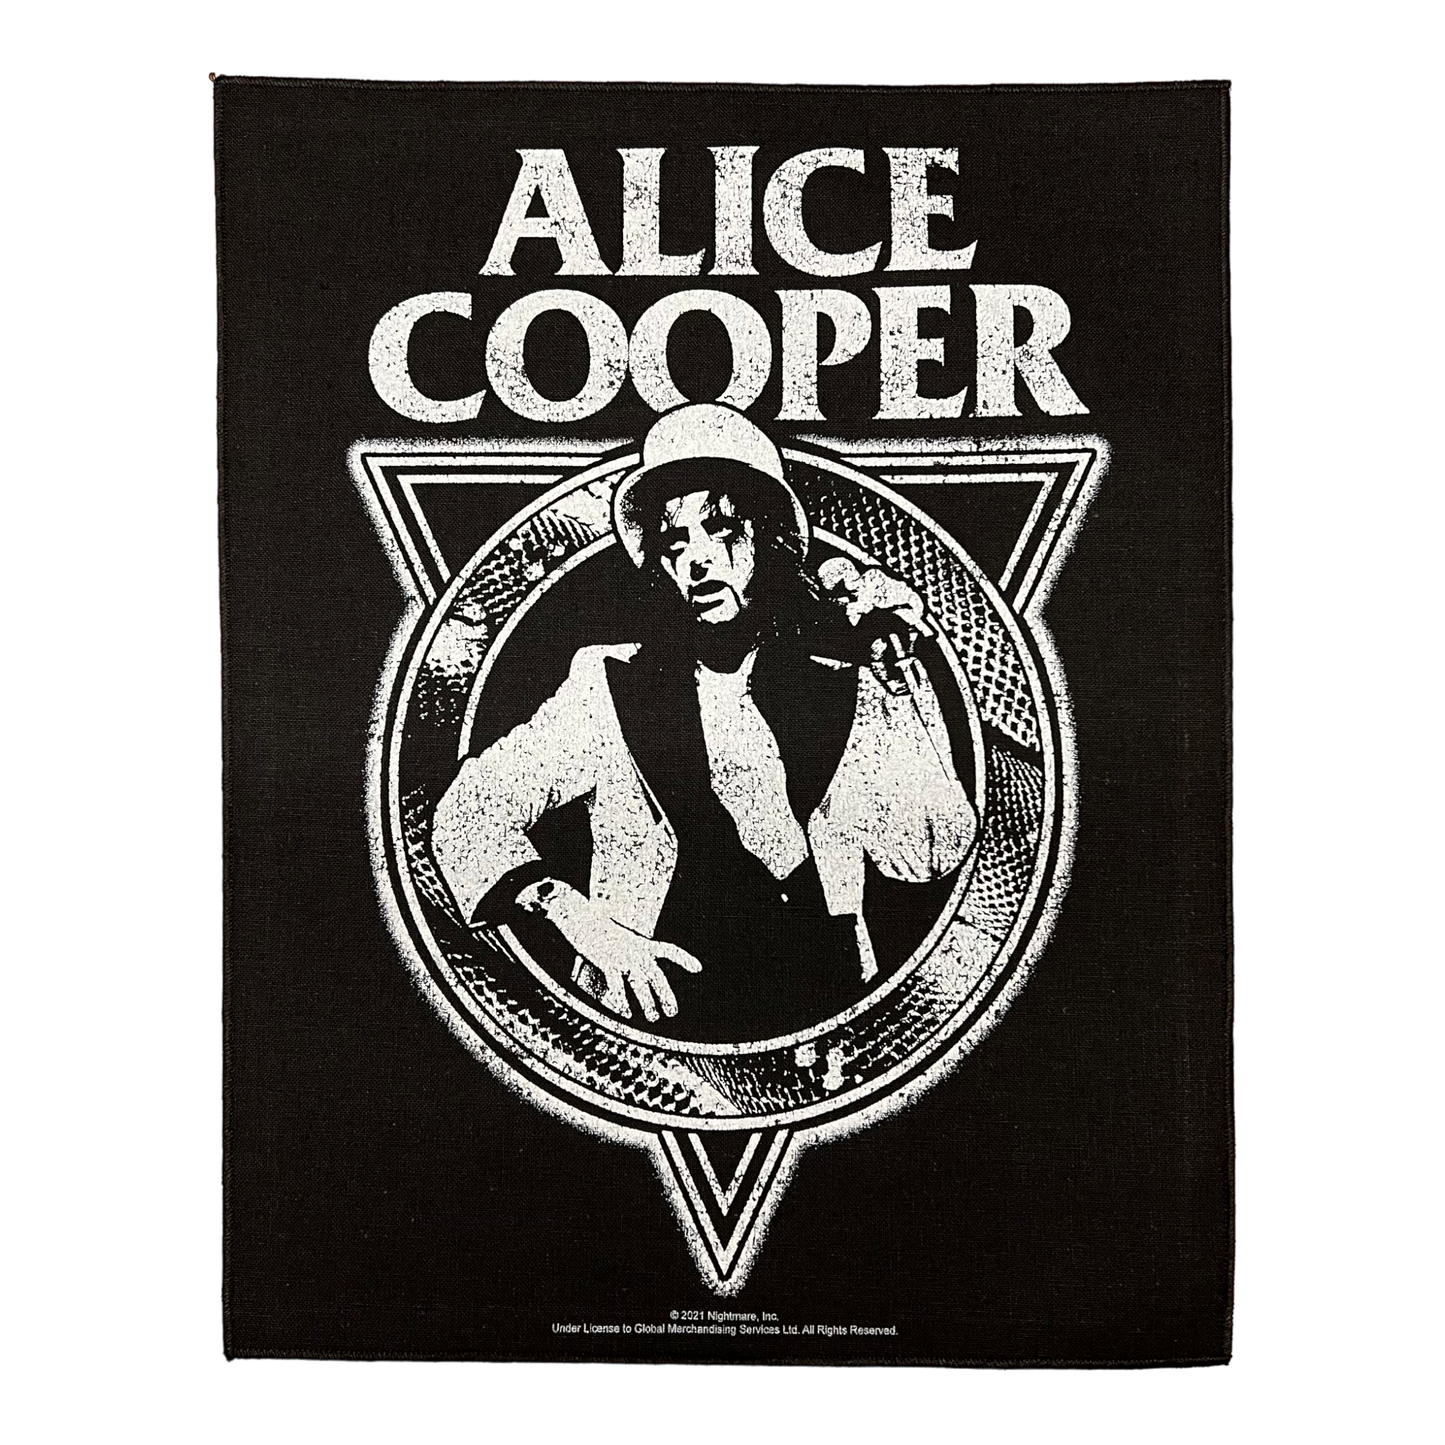 Alice Cooper bib